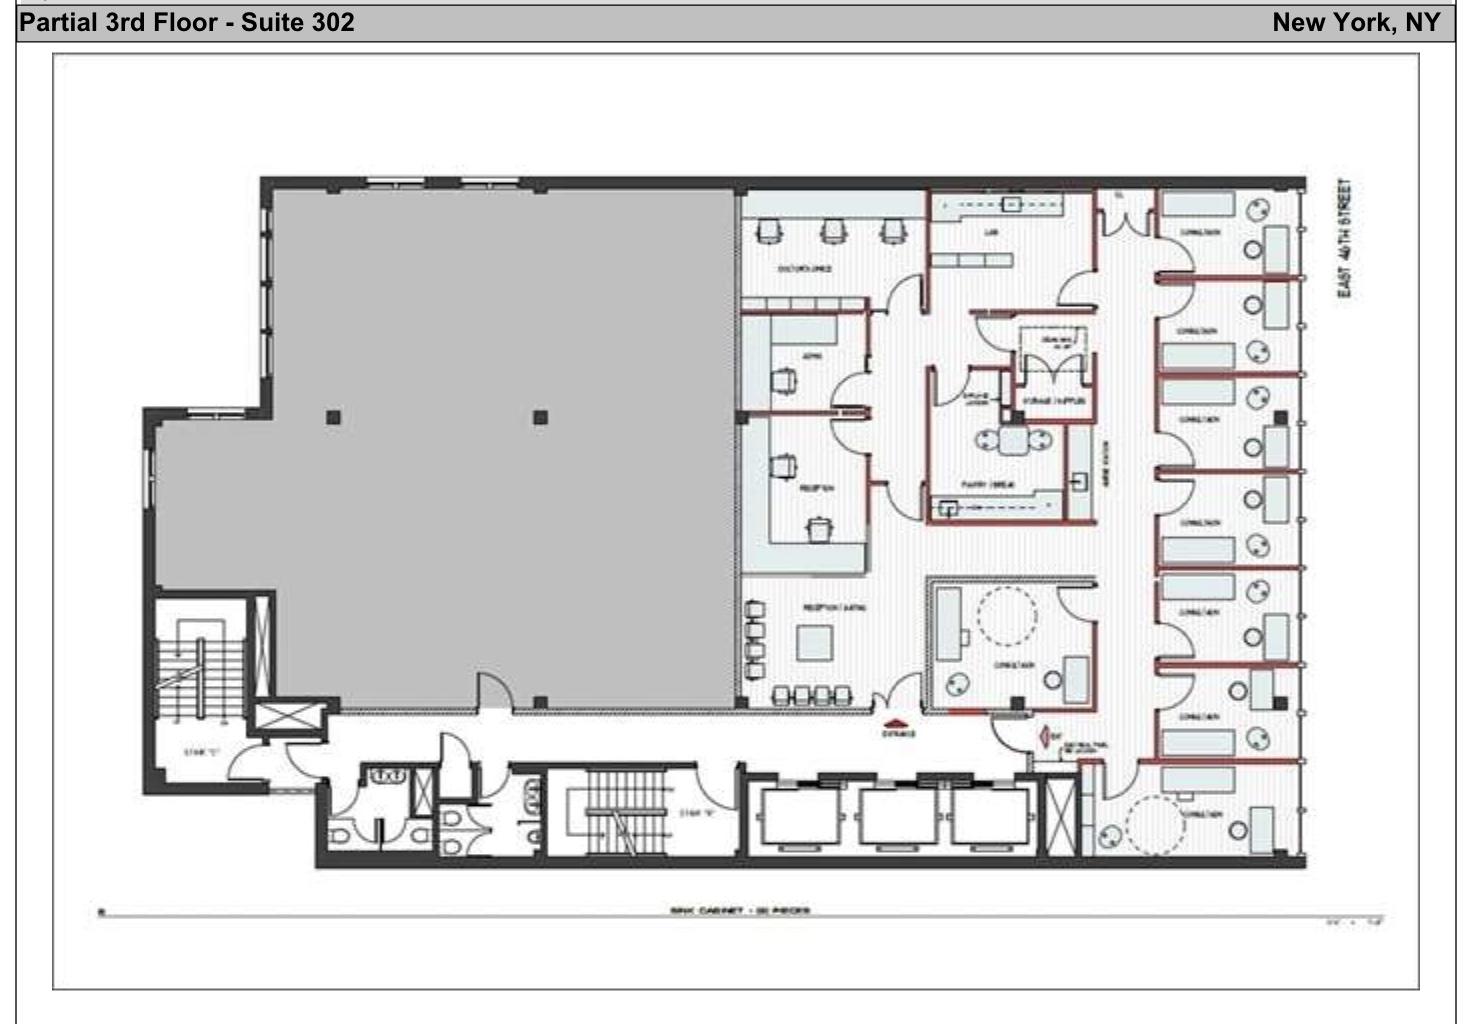 Floor plan of 20 East 46th Street medical office space, NYC